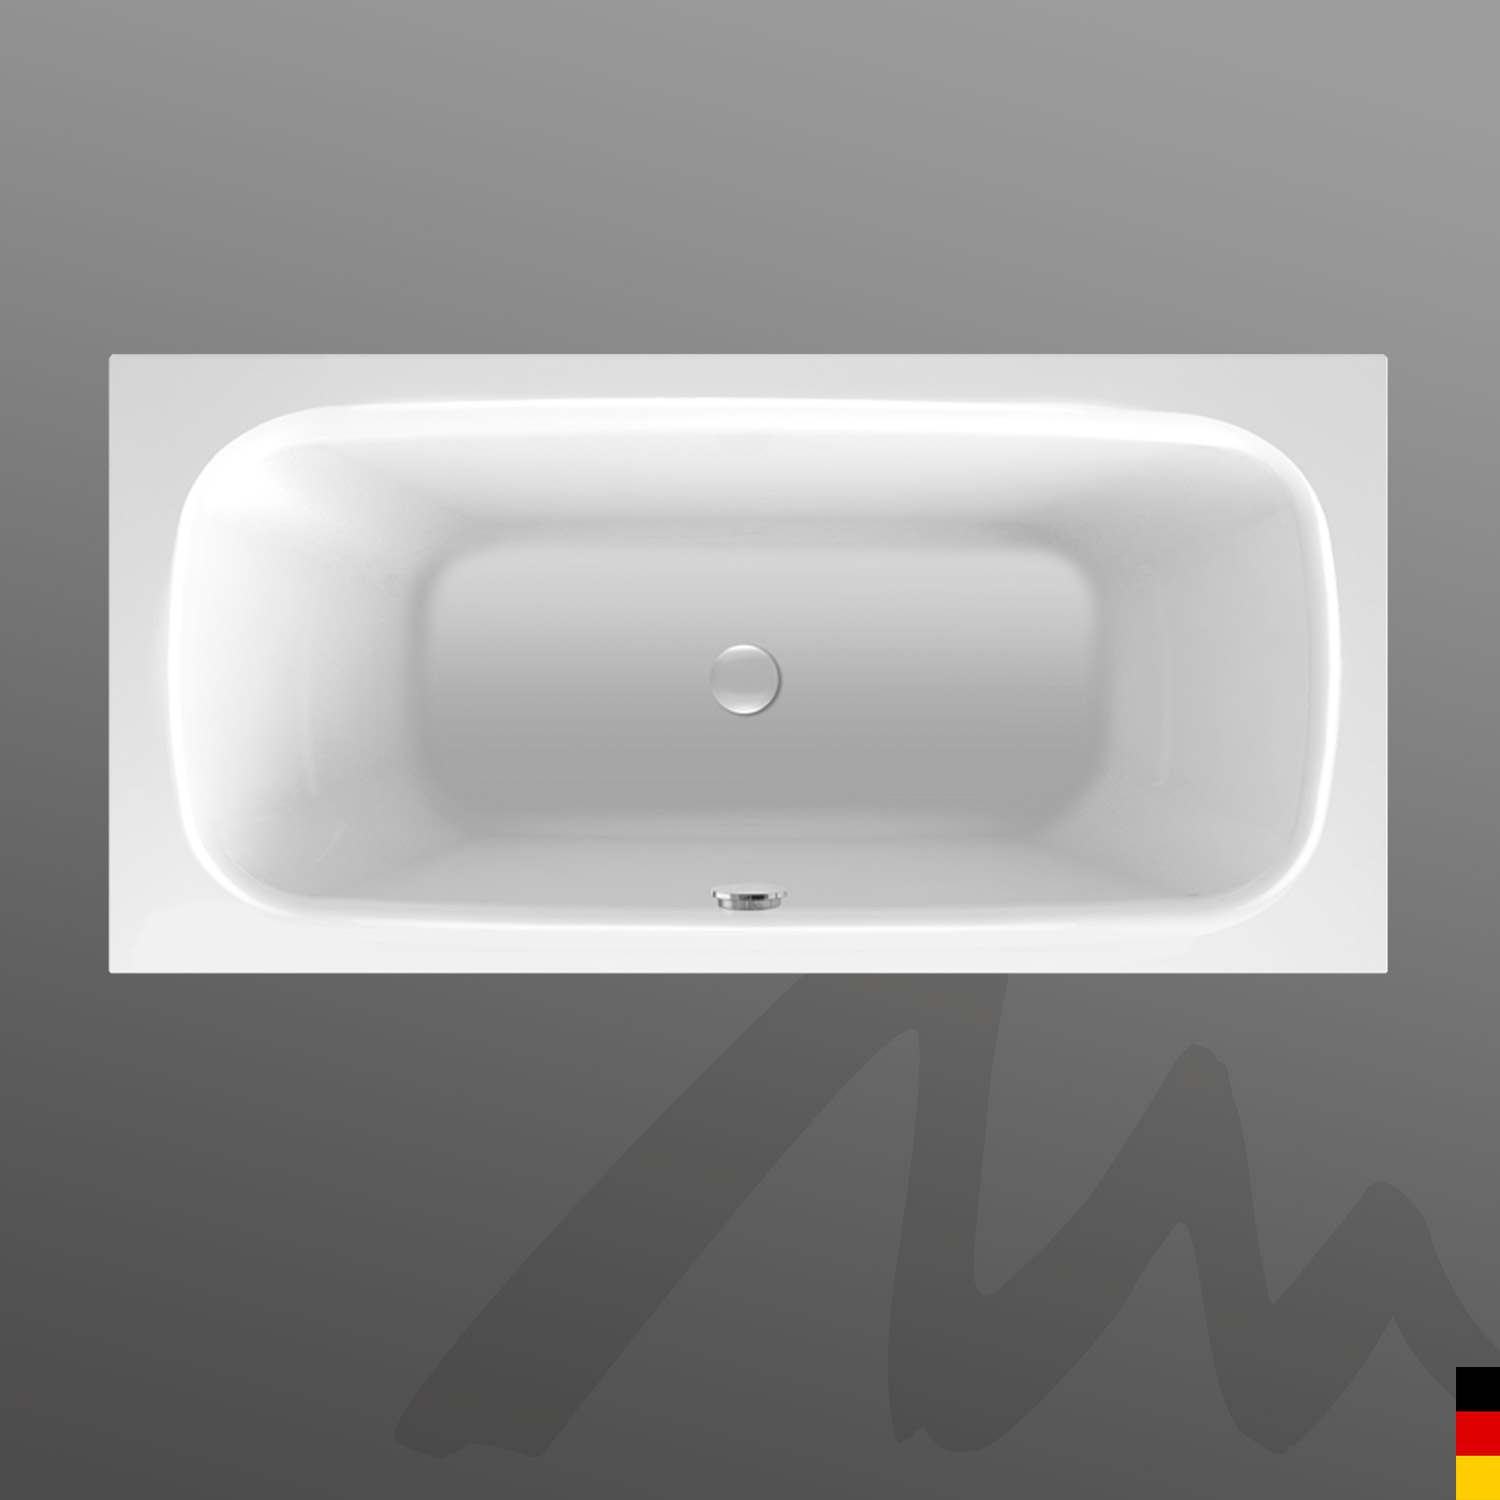 Mauersberger Badewanne Rechteck Nivalis Square 180/90 uno  180x90x43cm  Farbe:weiß